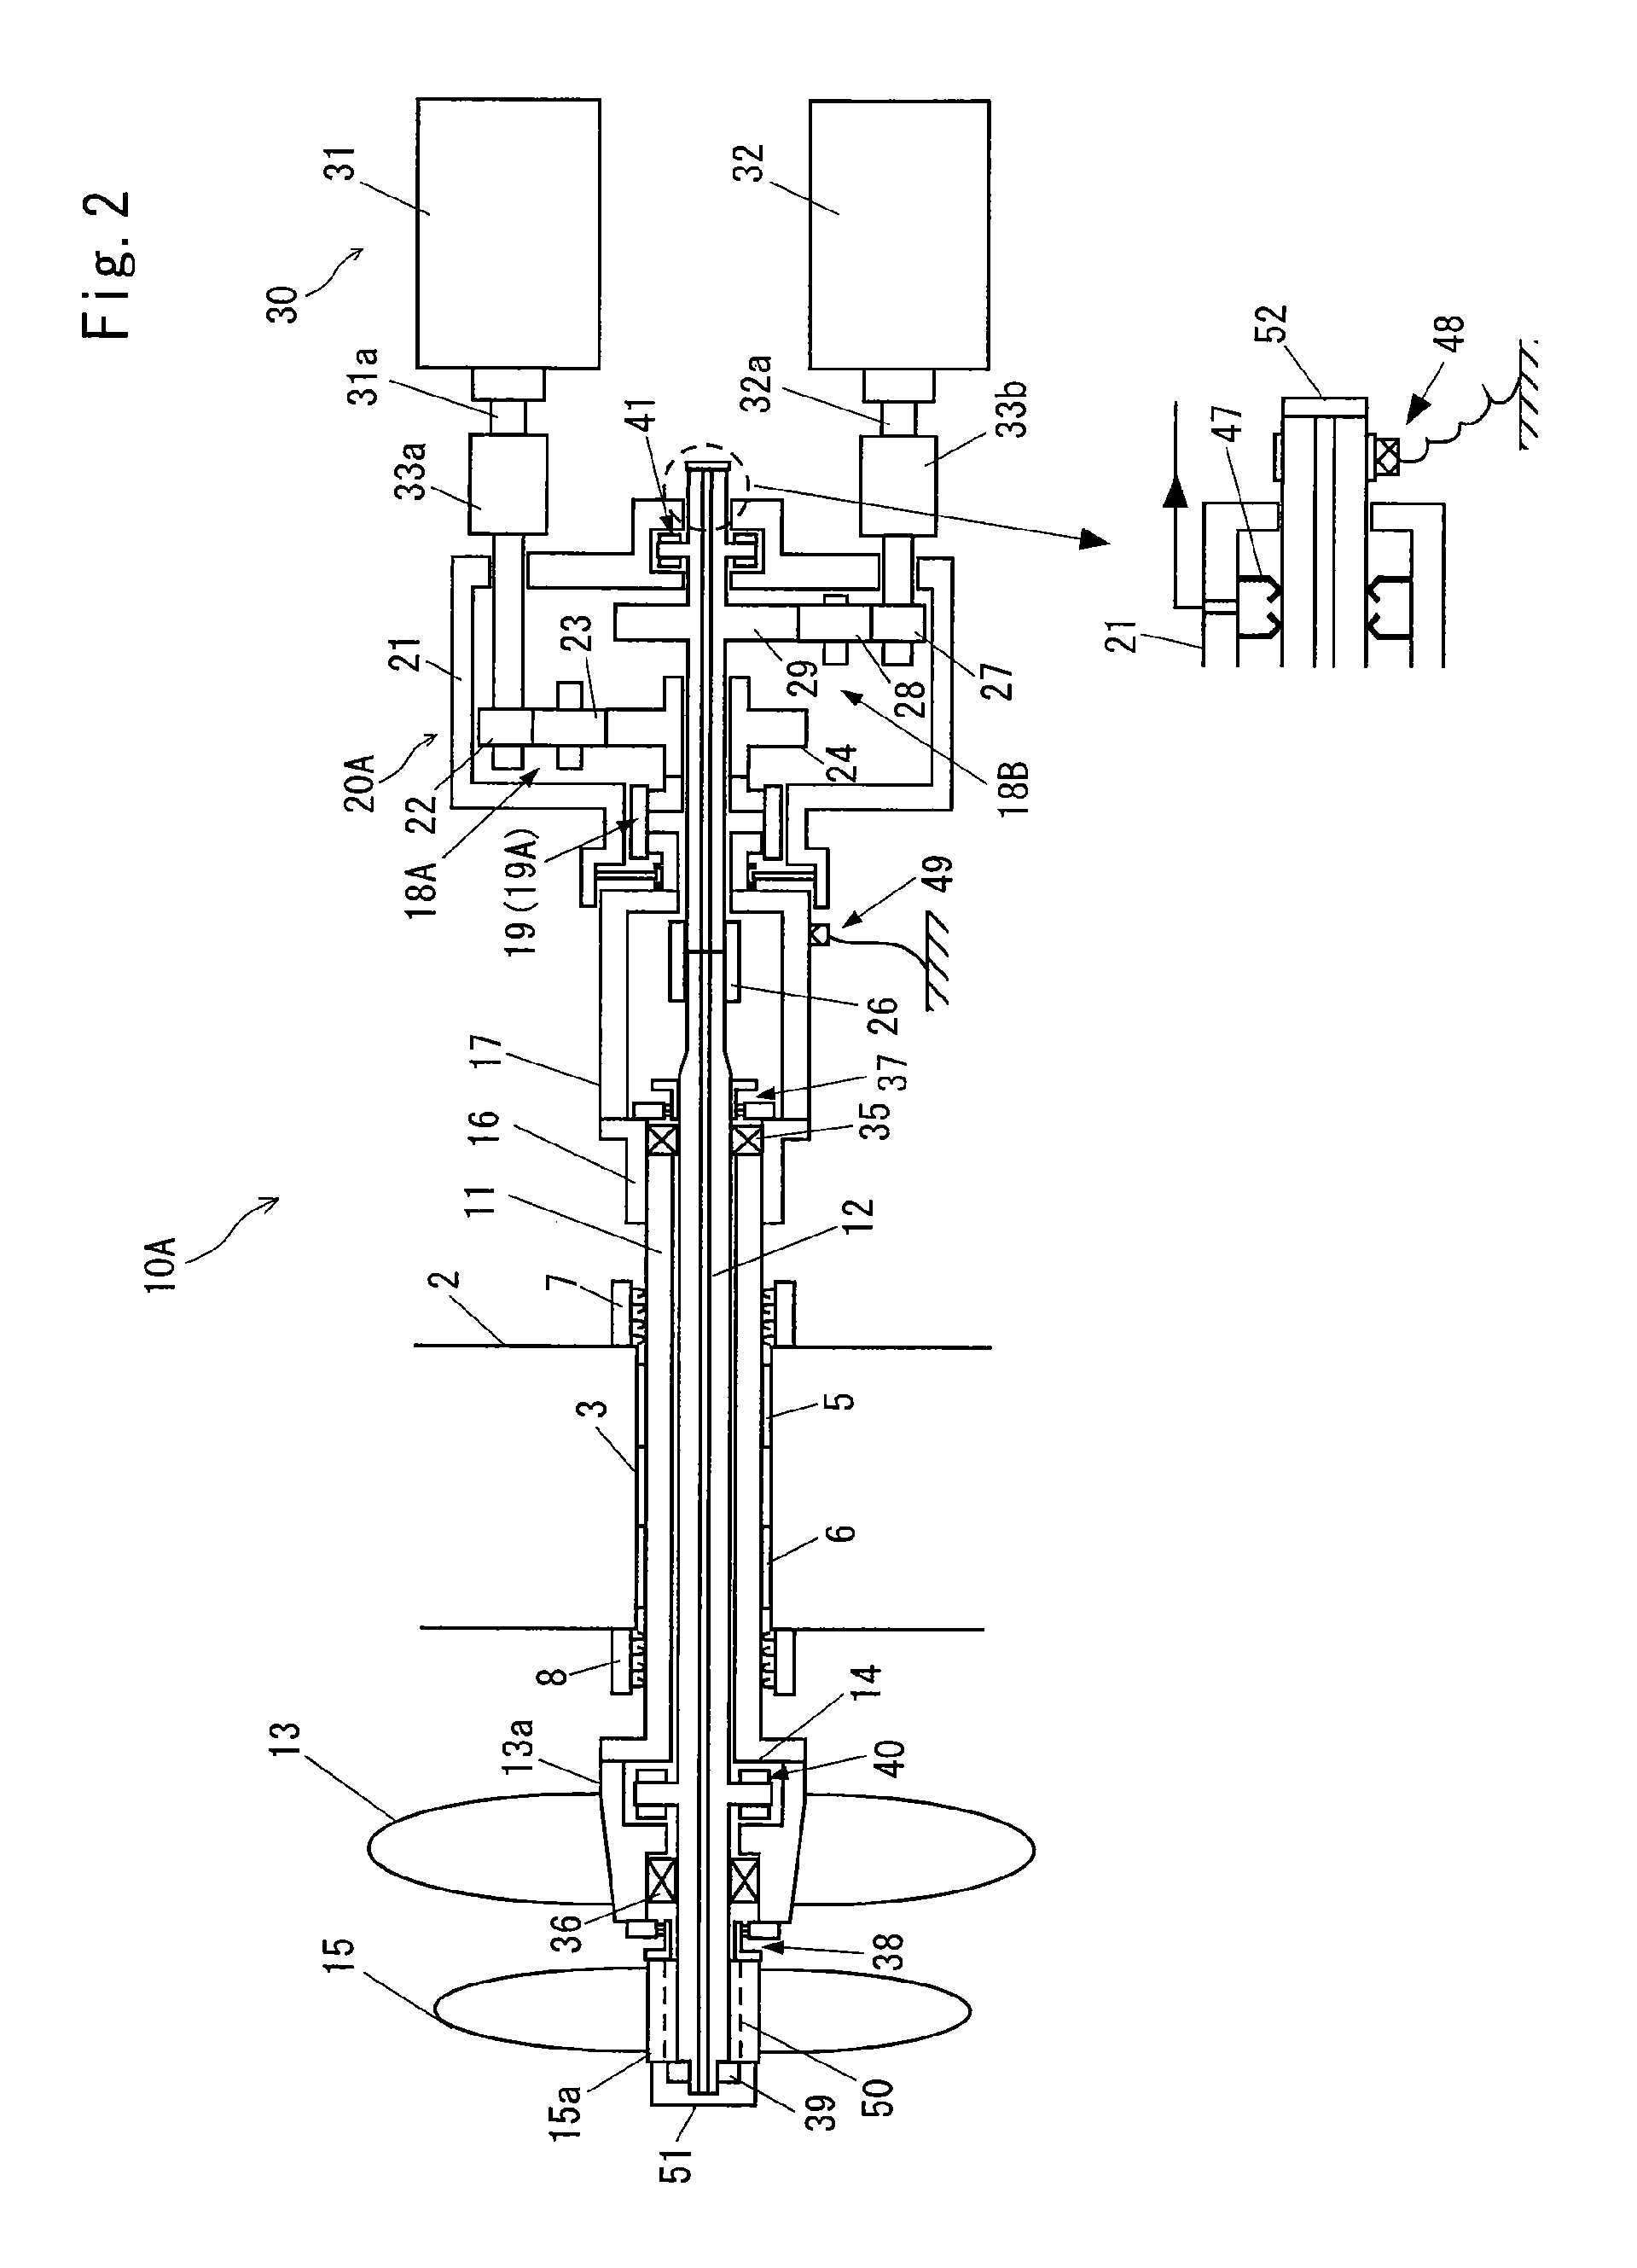 Contra-rotating propeller marine propulsion device